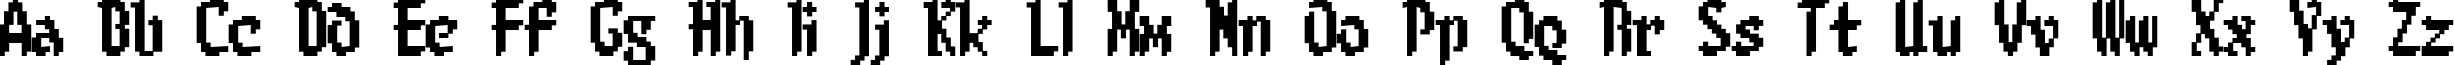 Пример написания английского алфавита шрифтом 8-bit Limit (BRK)